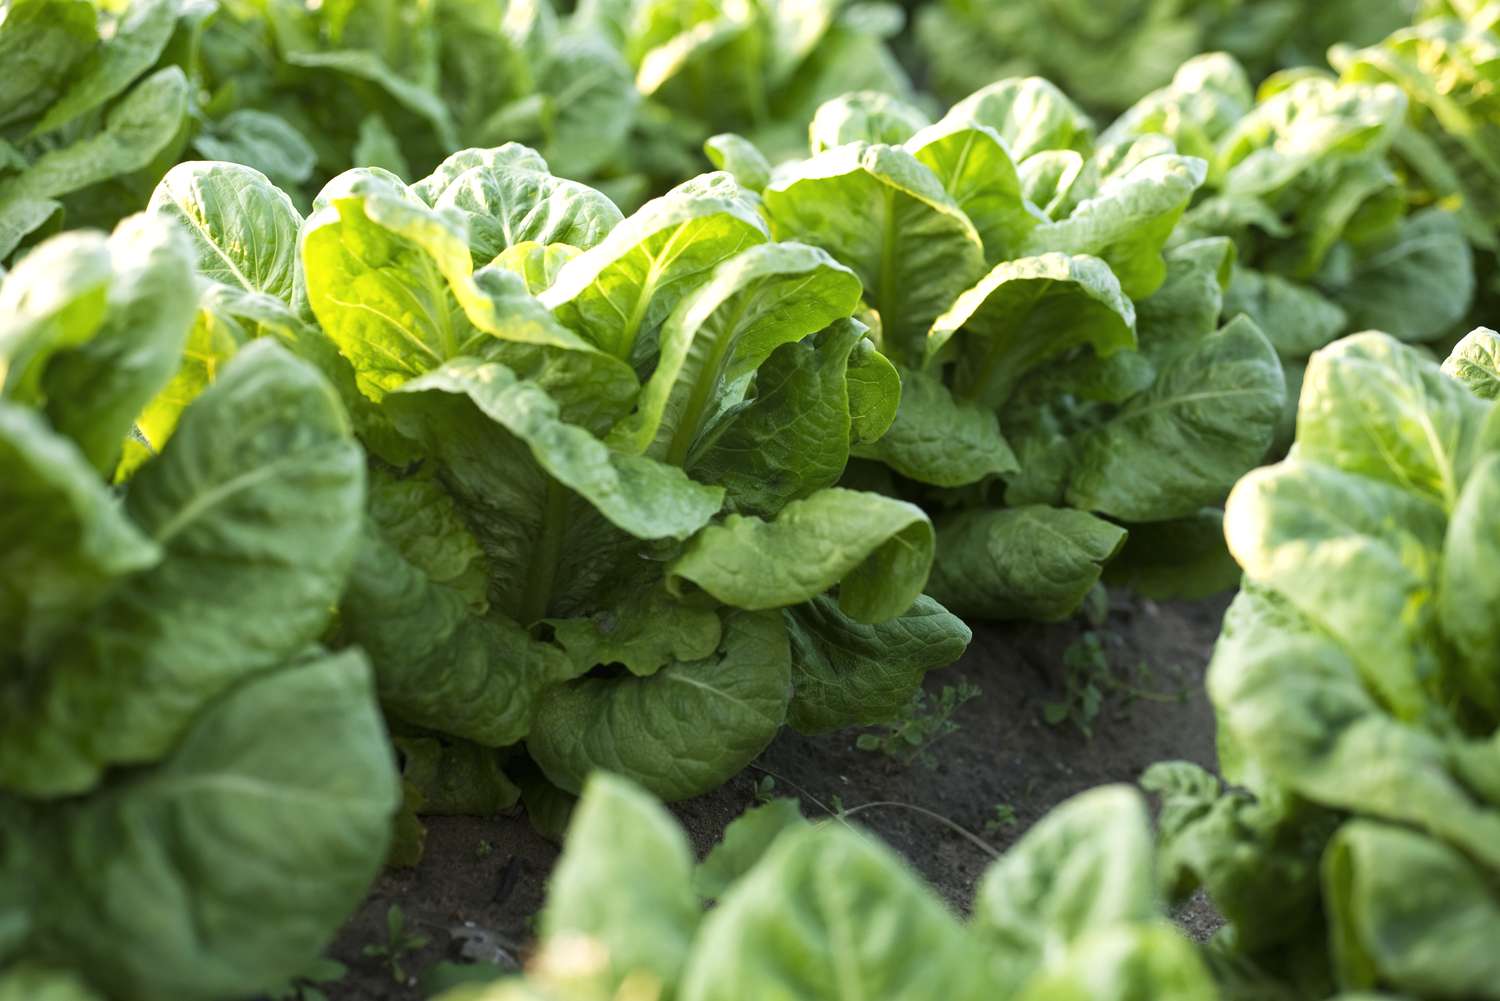 Image of lettuce in garden